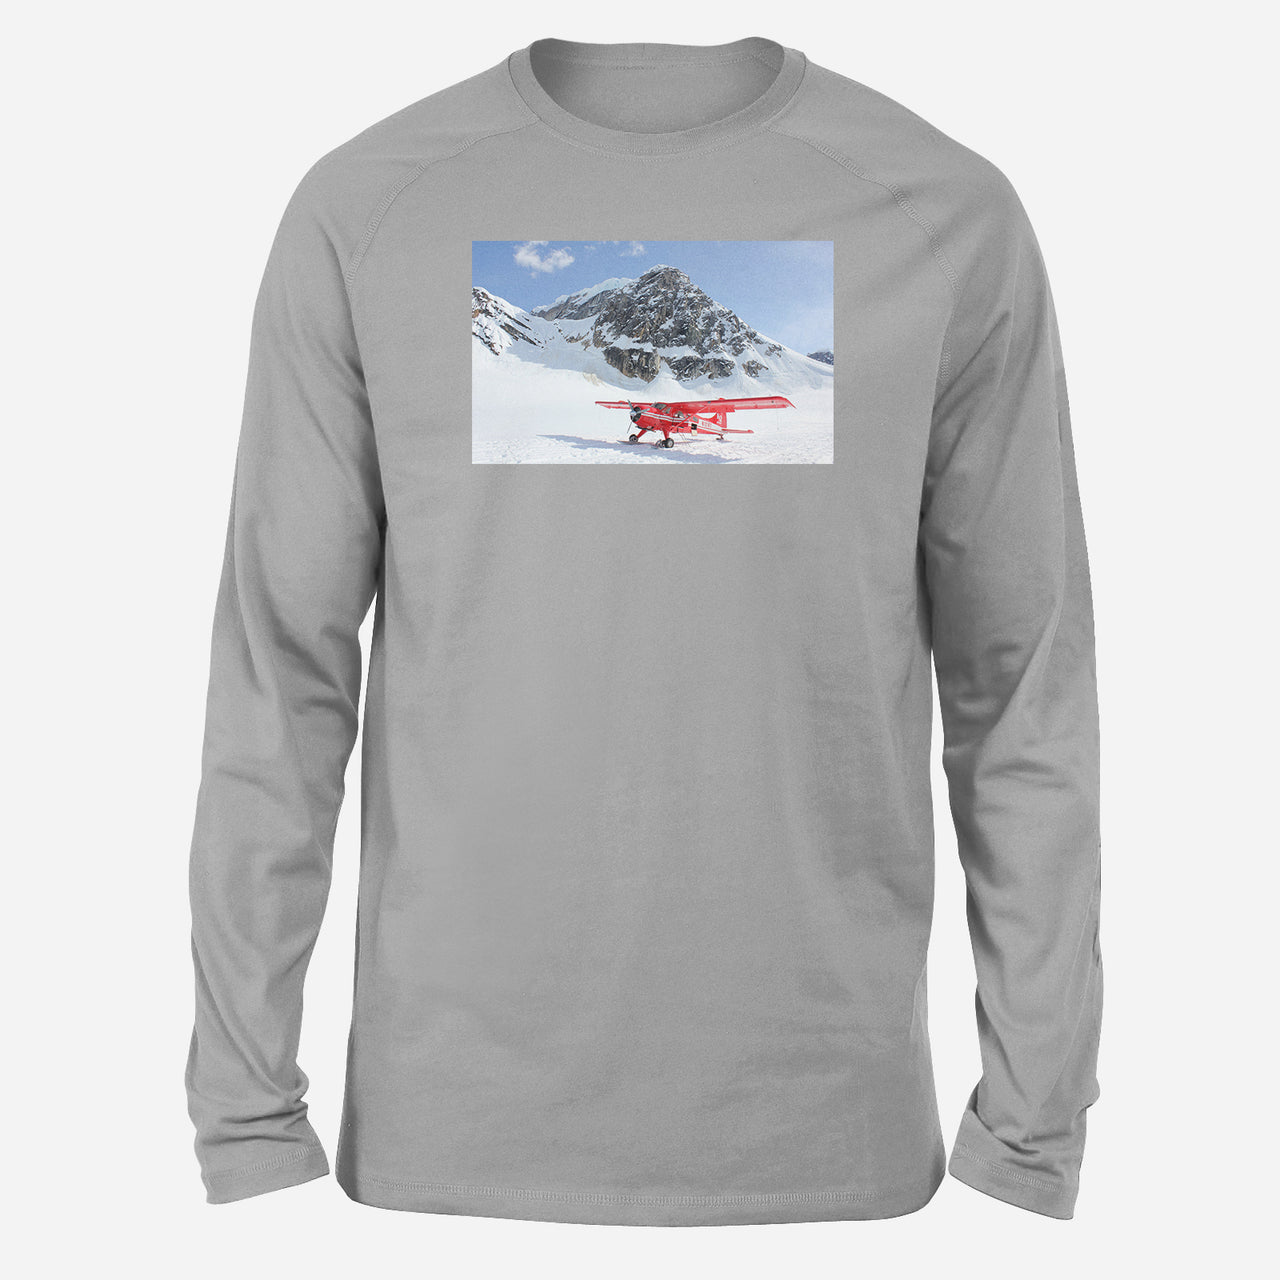 Amazing Snow Airplane Designed Long-Sleeve T-Shirts